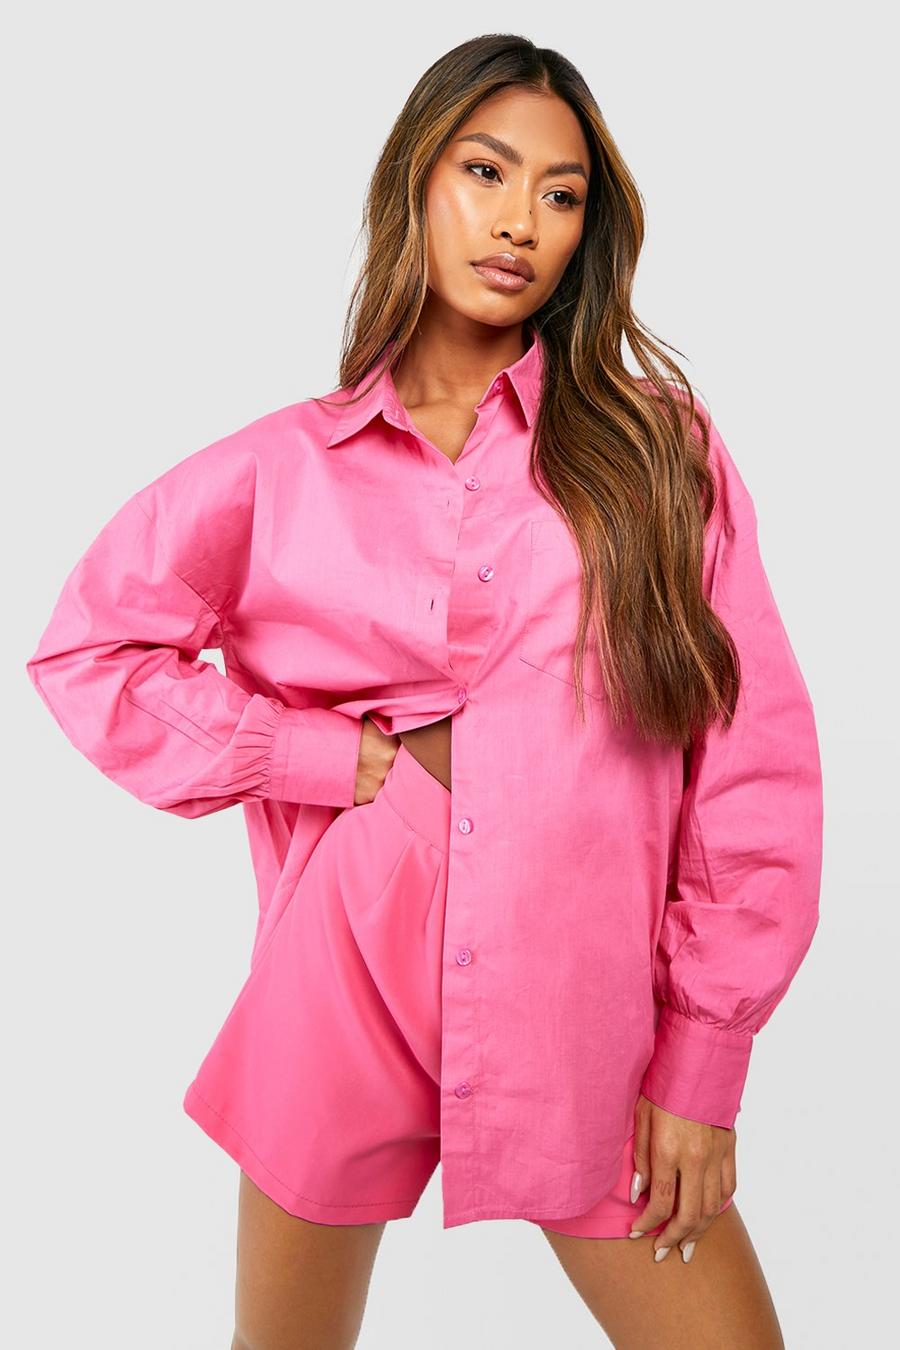 Oversize Hemd aus Baumwolle, Hot pink rose